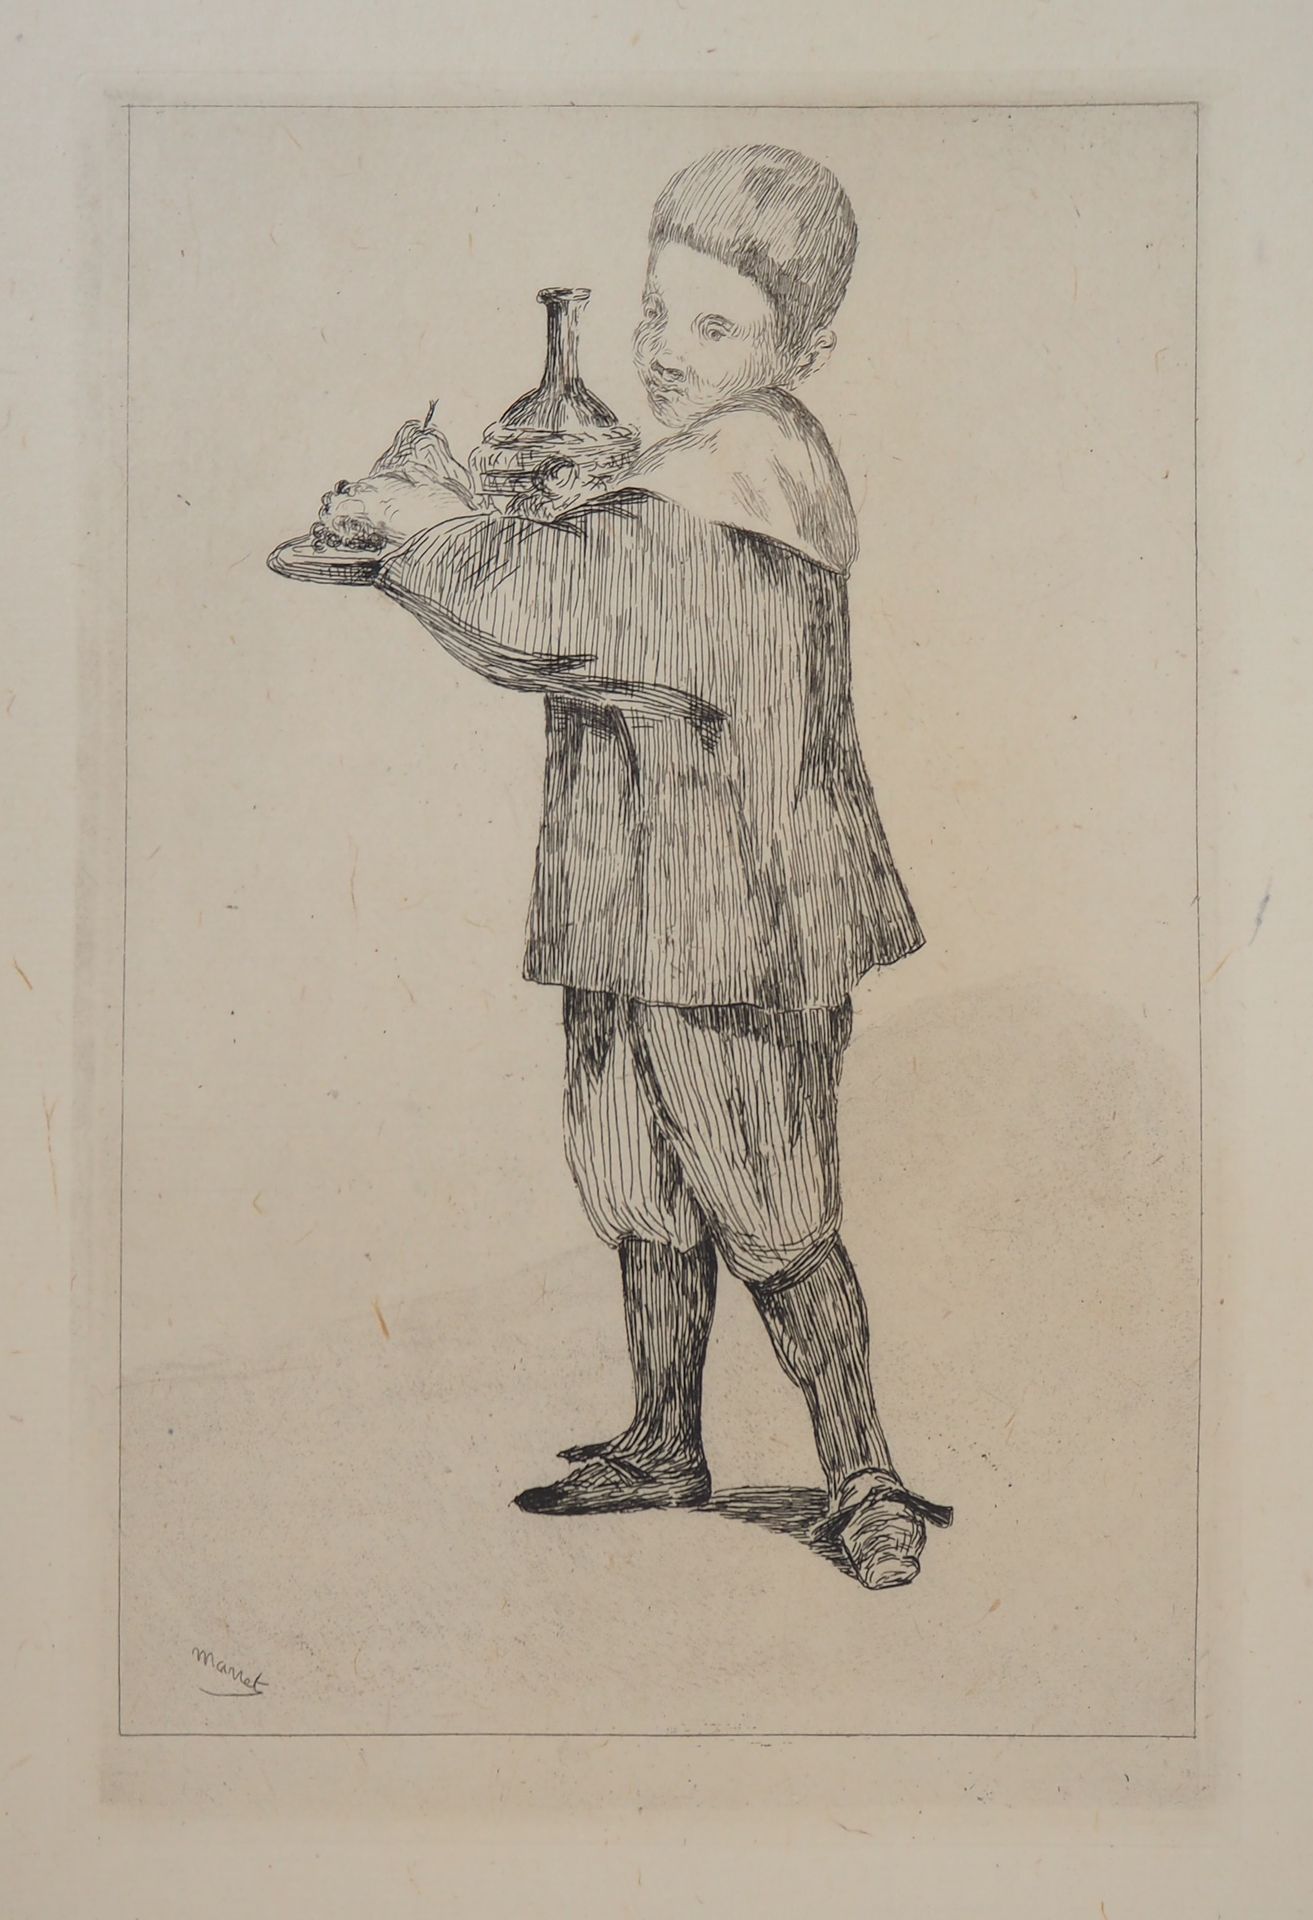 Edouard MANET Edouard MANET

Bambino che porta un vassoio, 1861

Incisione origi&hellip;